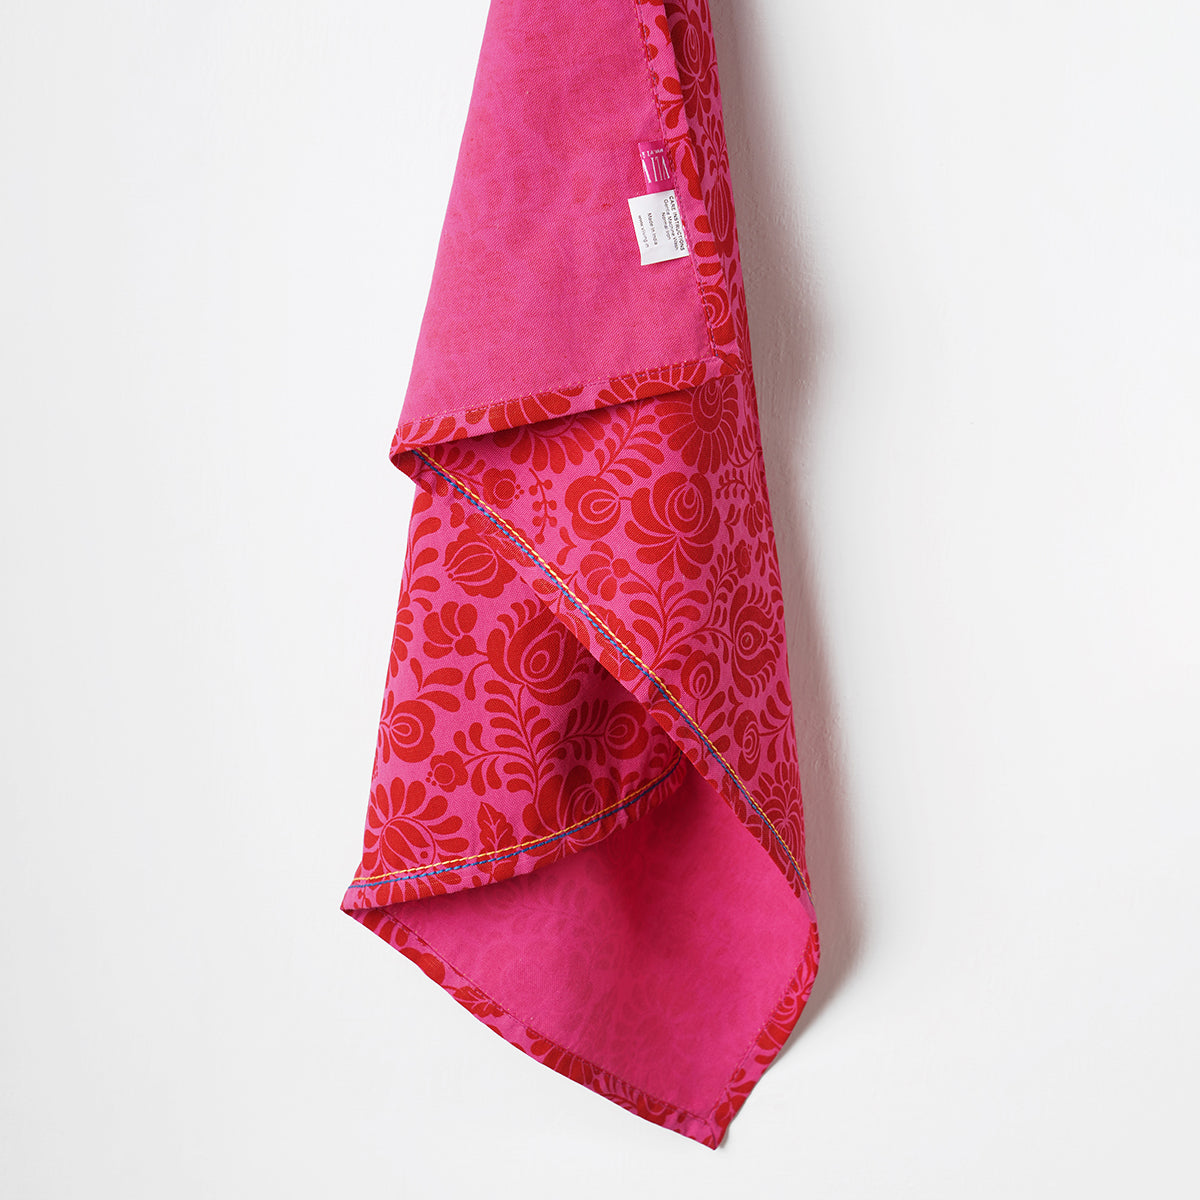 Matyo Hot Pink Printed Kitchen Towel, 100% cotton, size 20"X28"